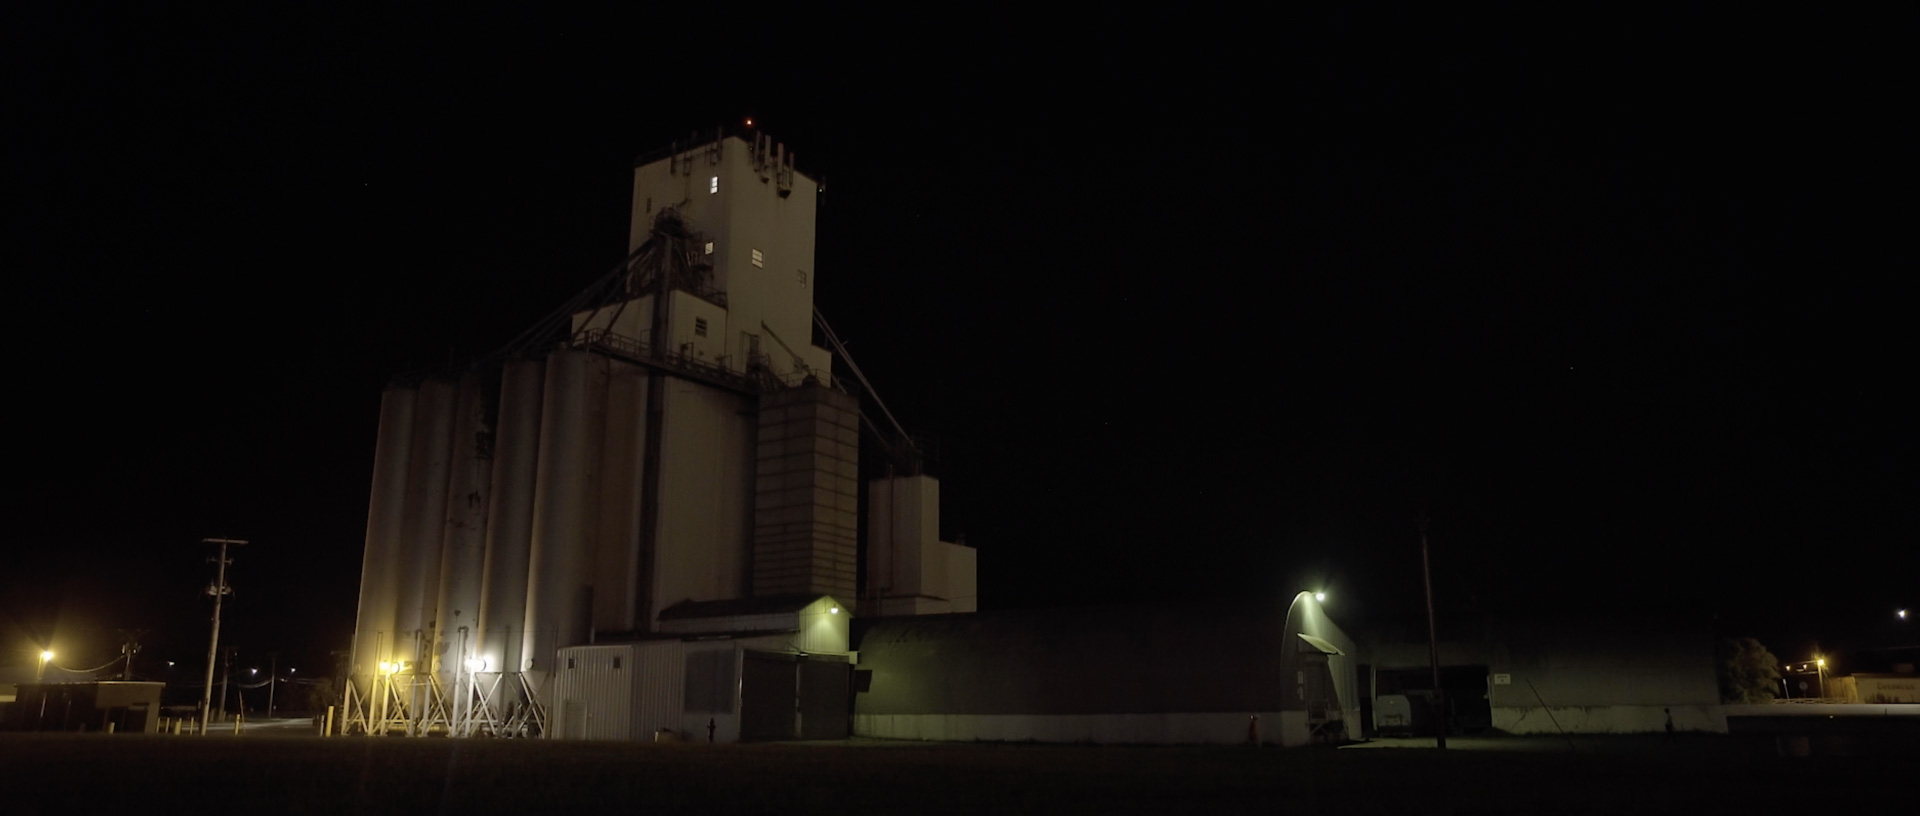 Grain elevator at night